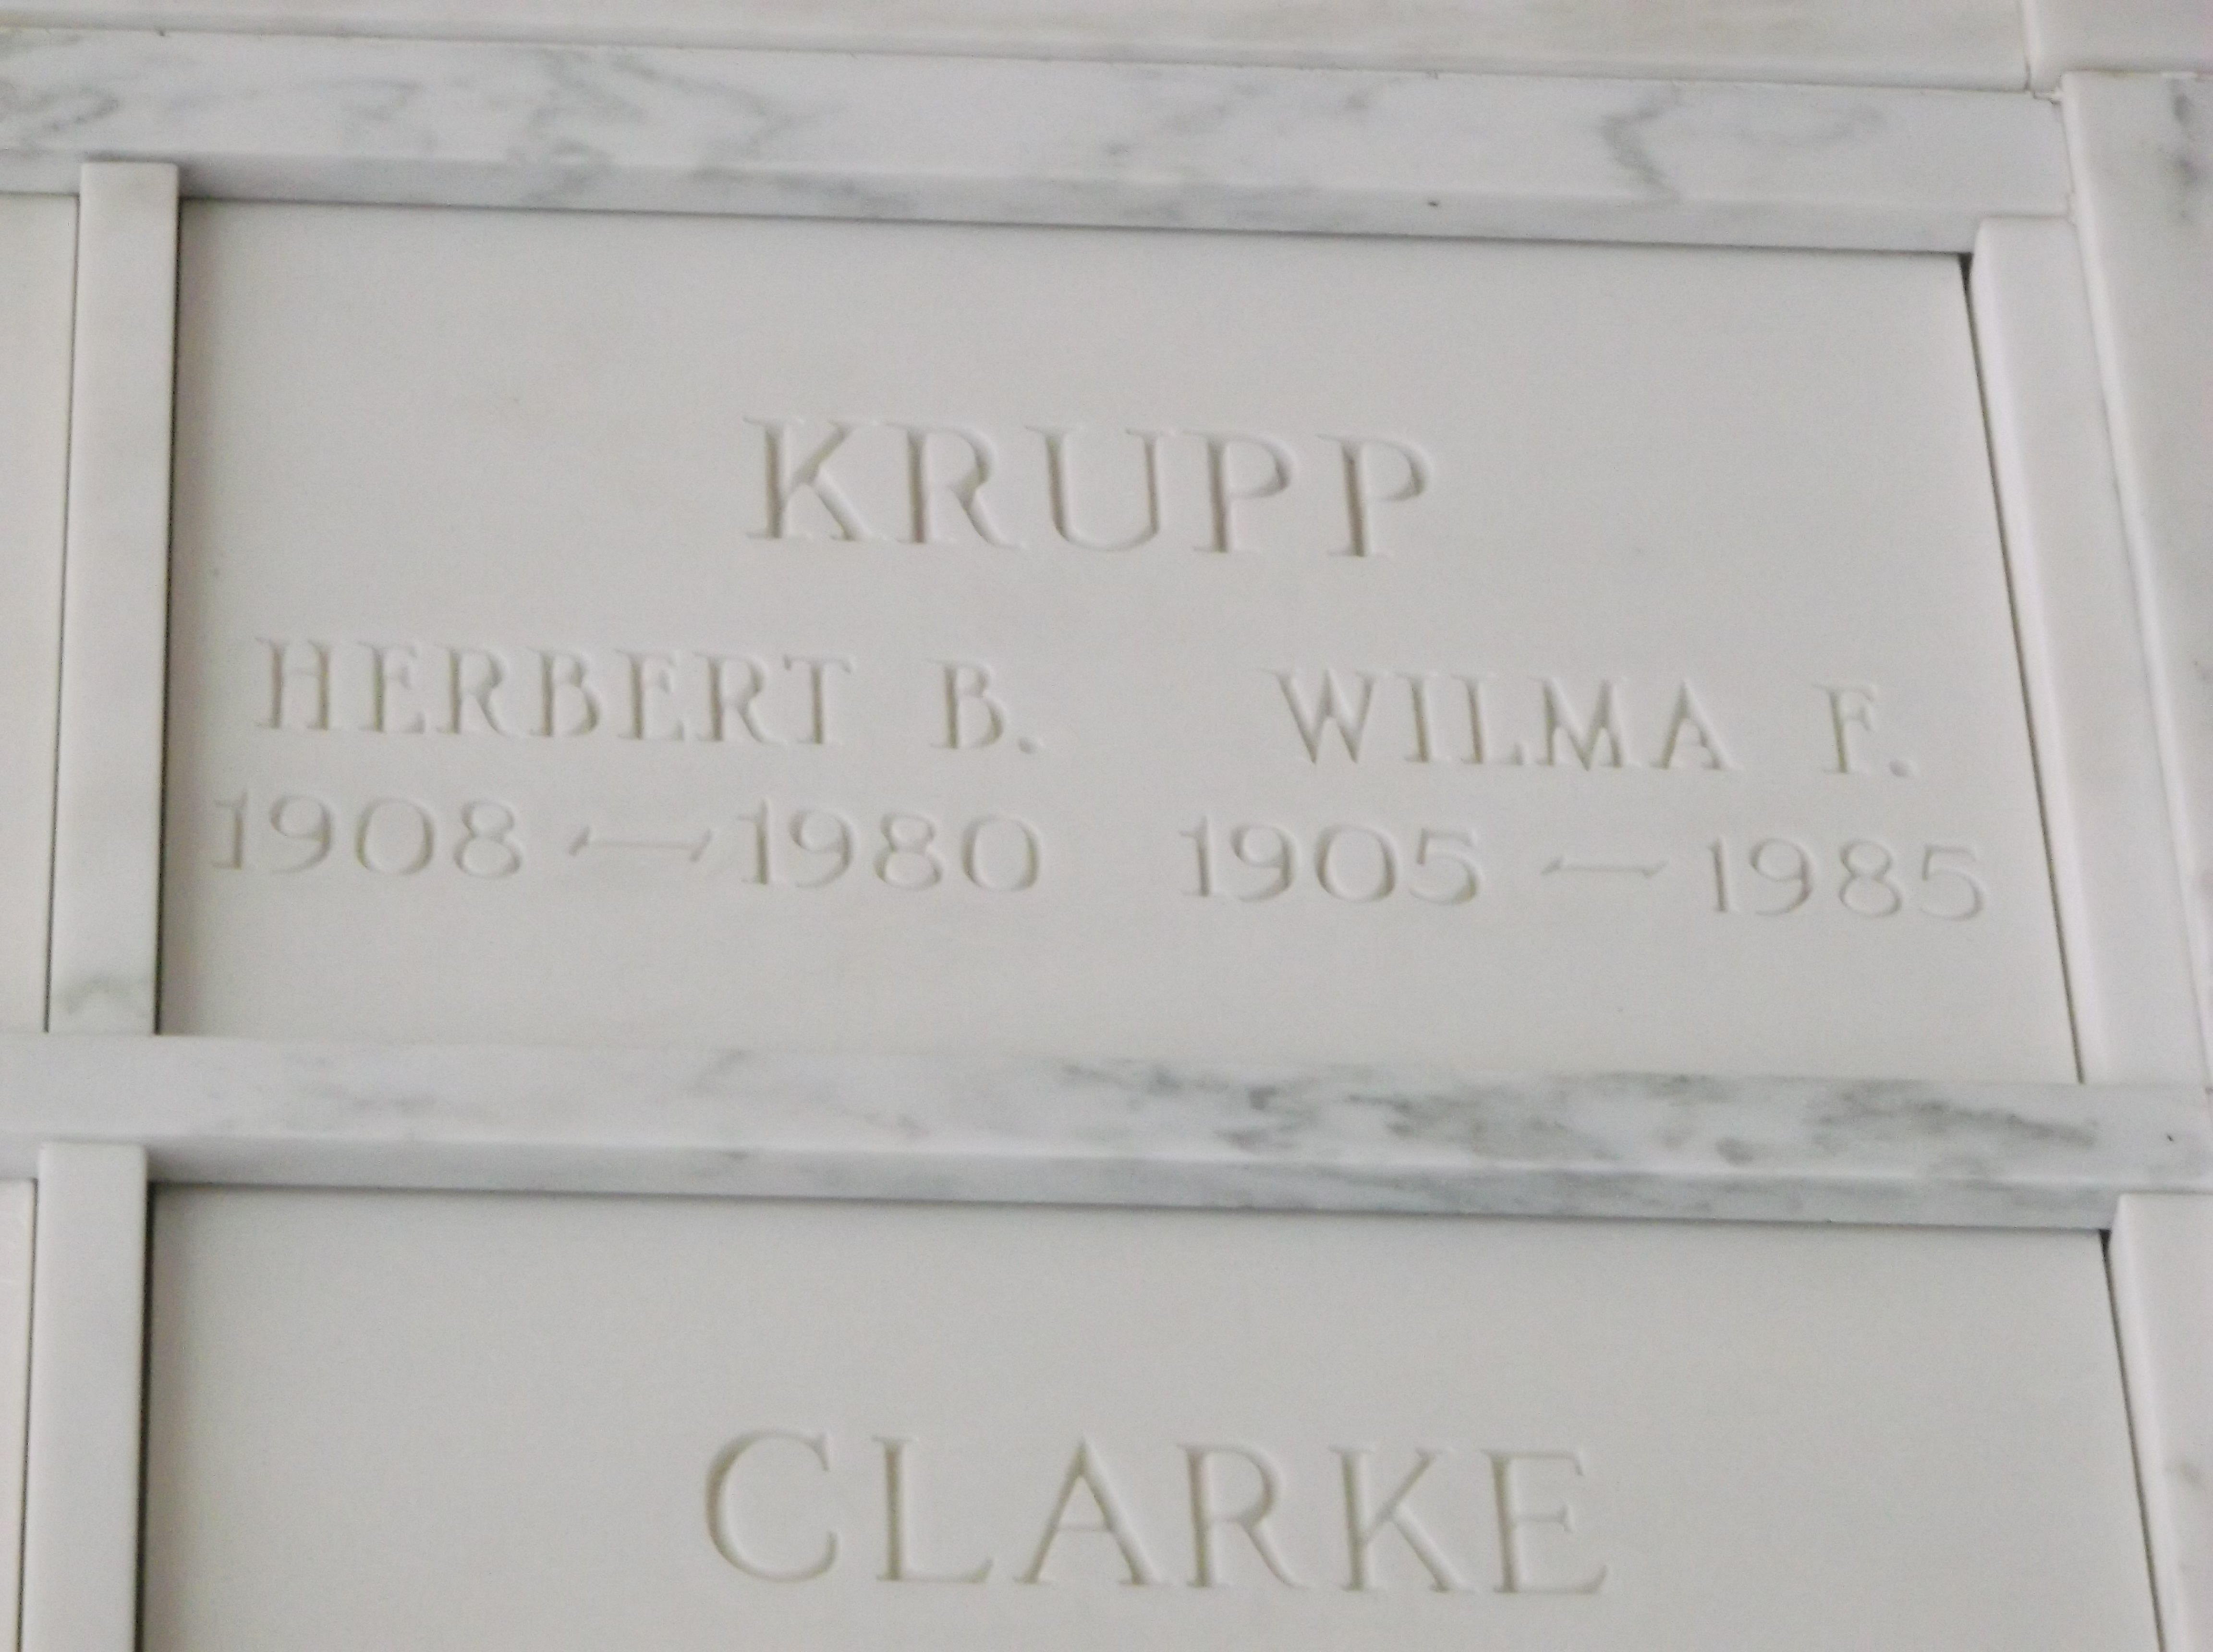 Wilma F Krupp